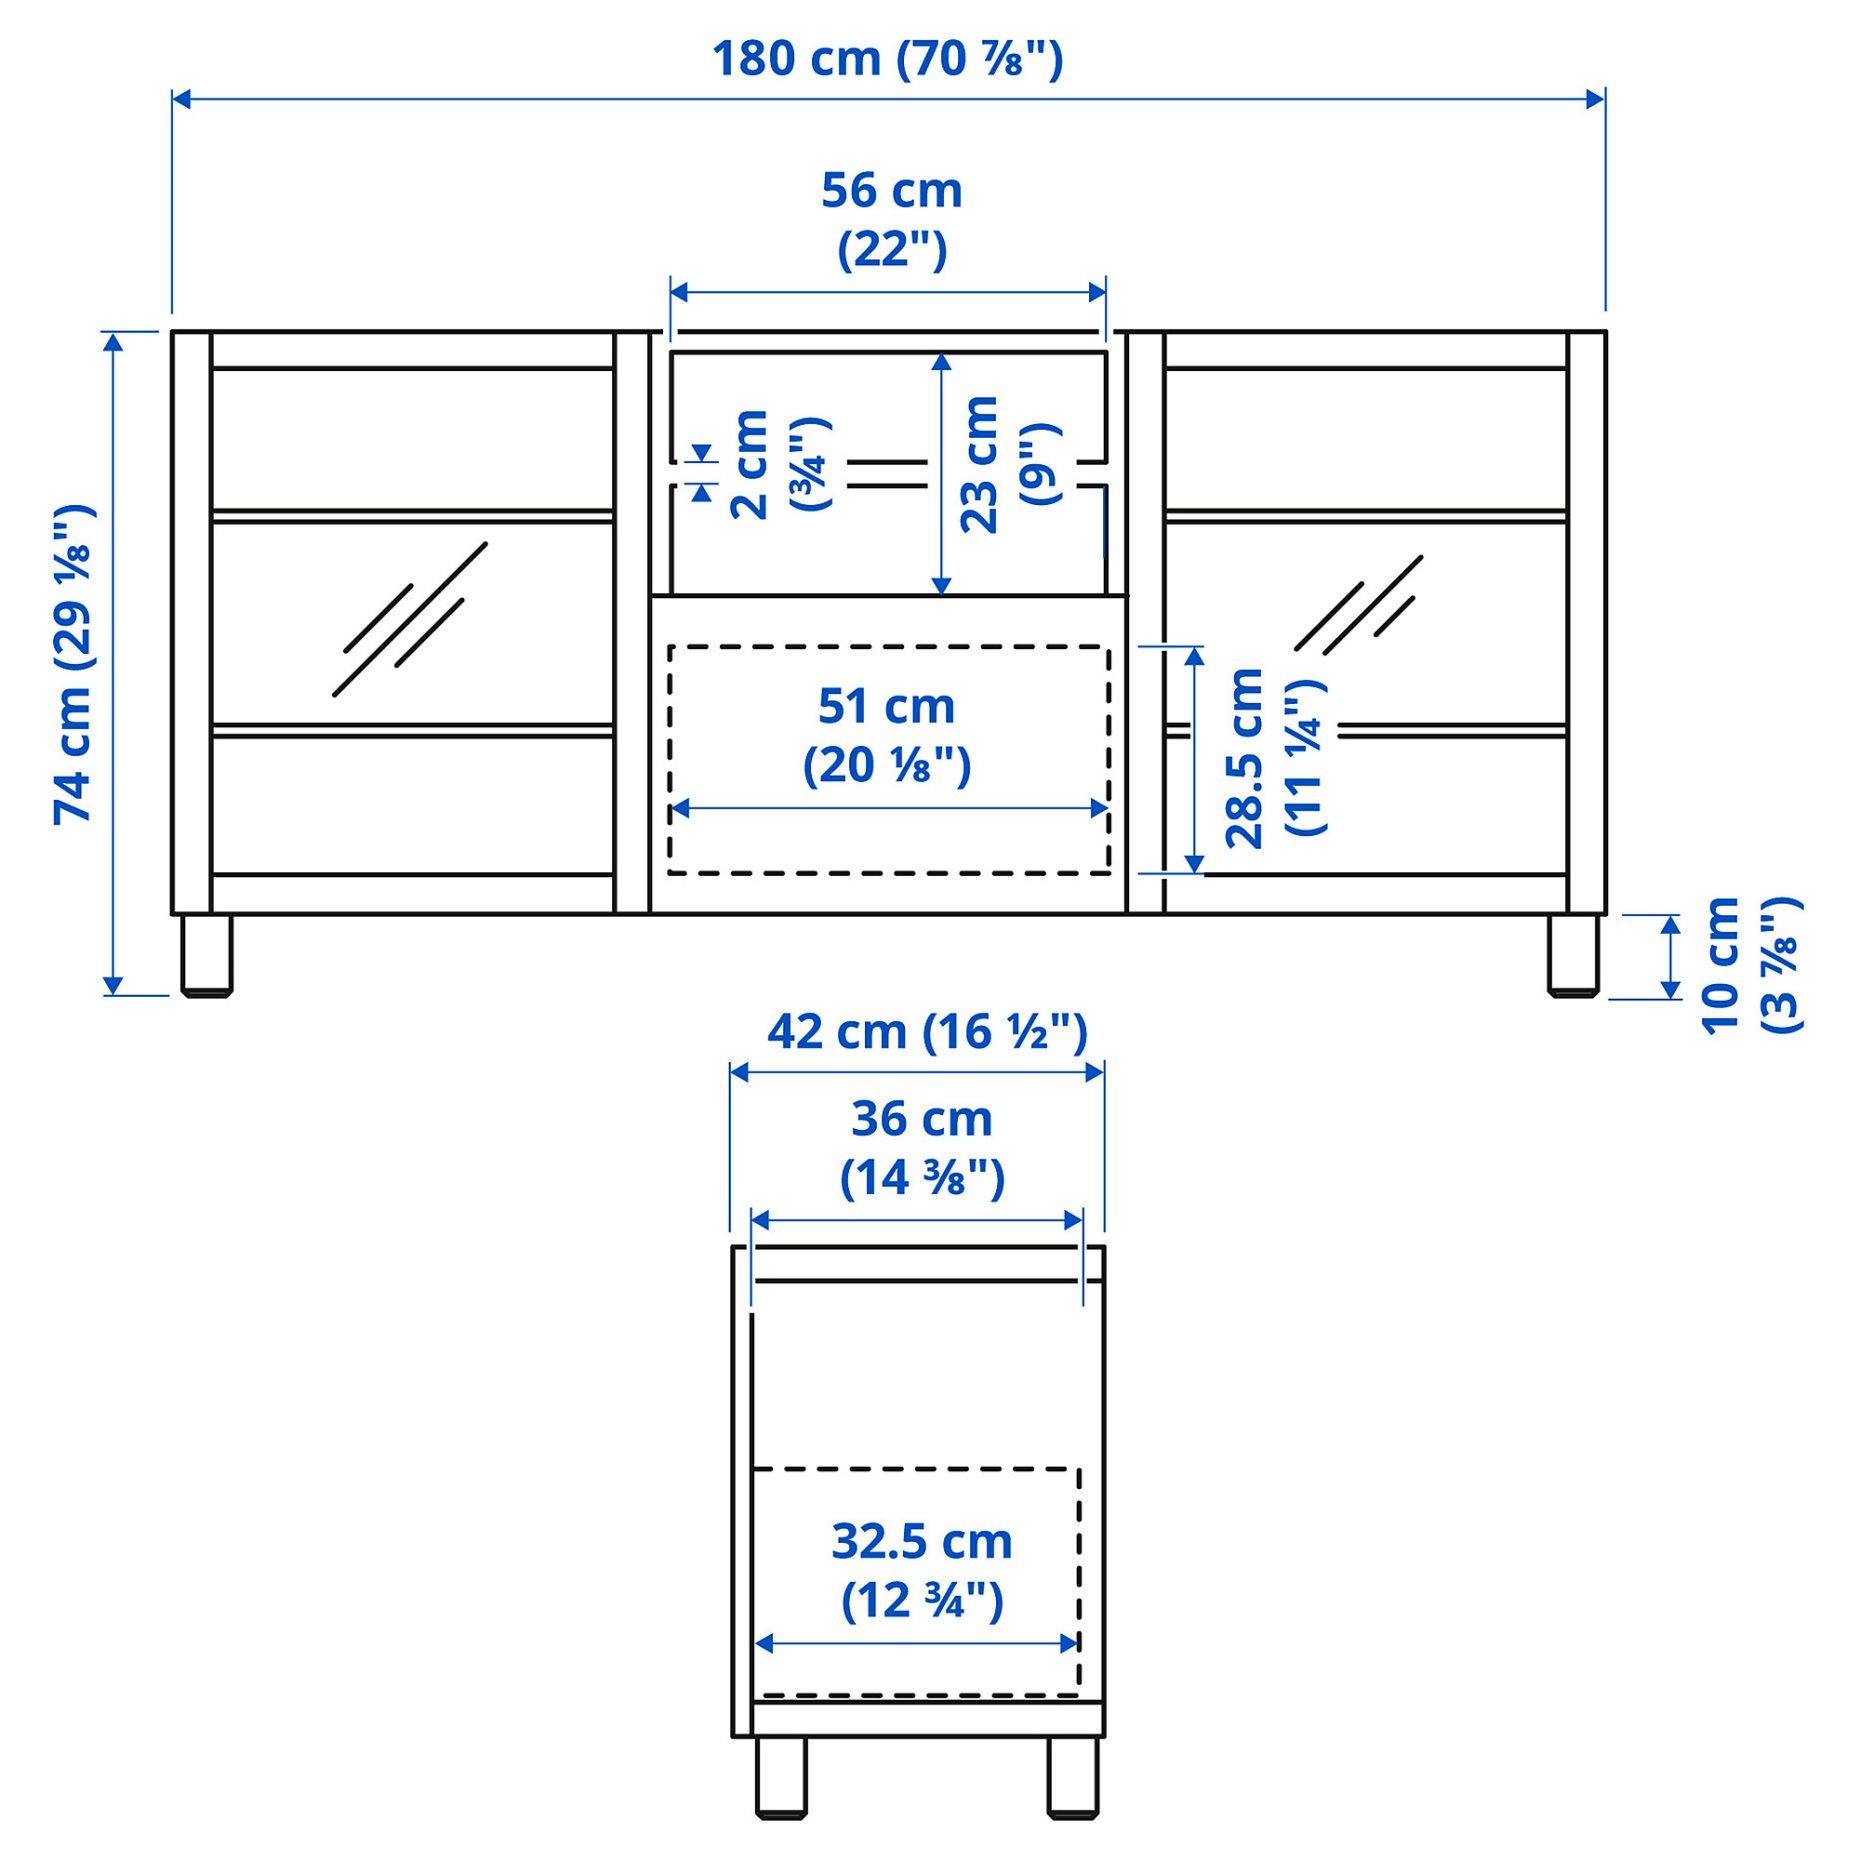 BESTÅ, TV bench with doors/drawer soft closing, 180x42x74 cm, 591.941.00